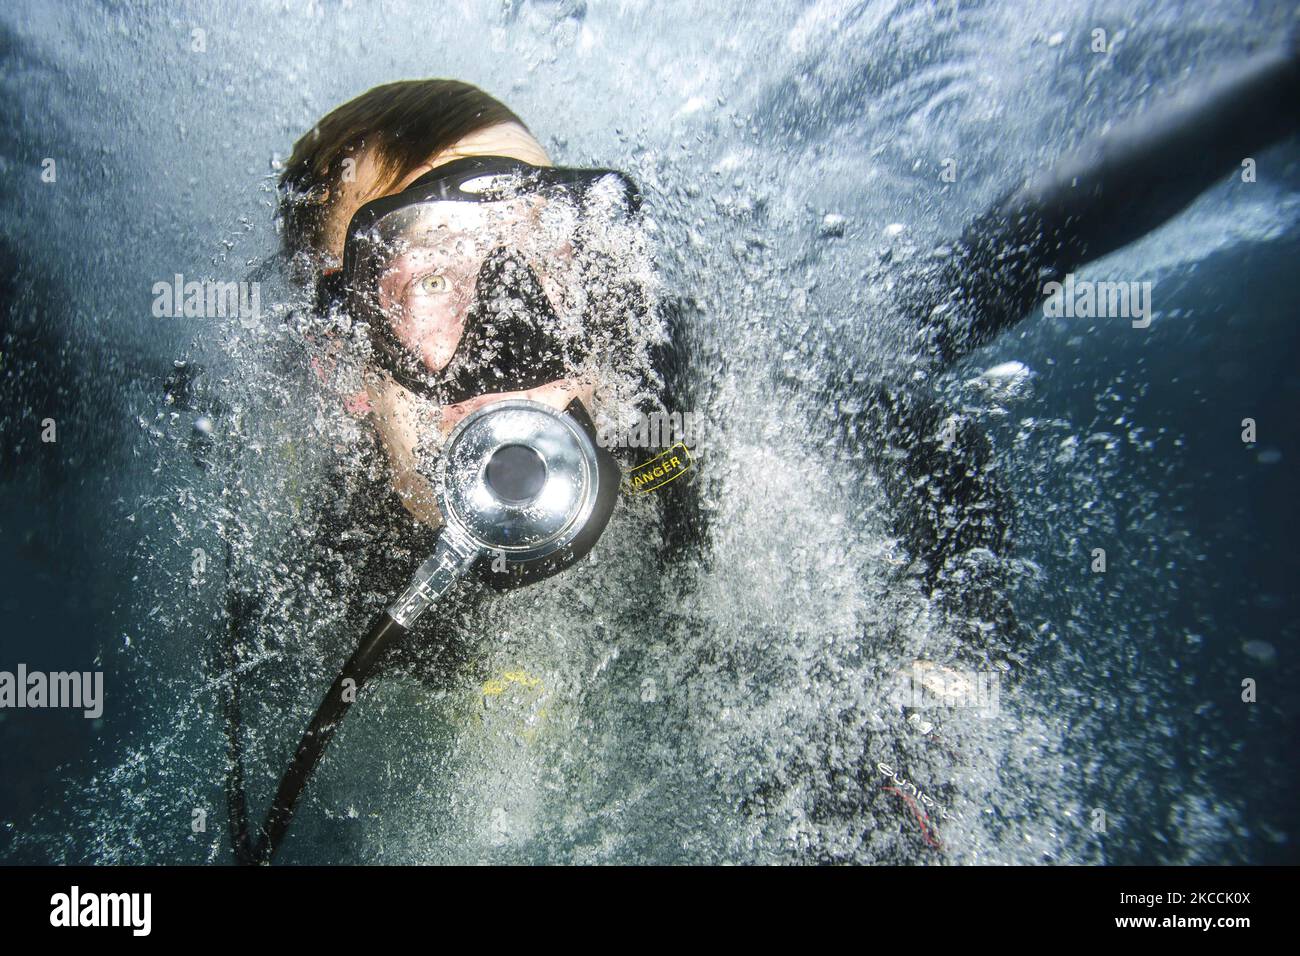 U.S. Navy Petty Officer enters the water off the coast of Guantanamo Bay, Cuba. Stock Photo